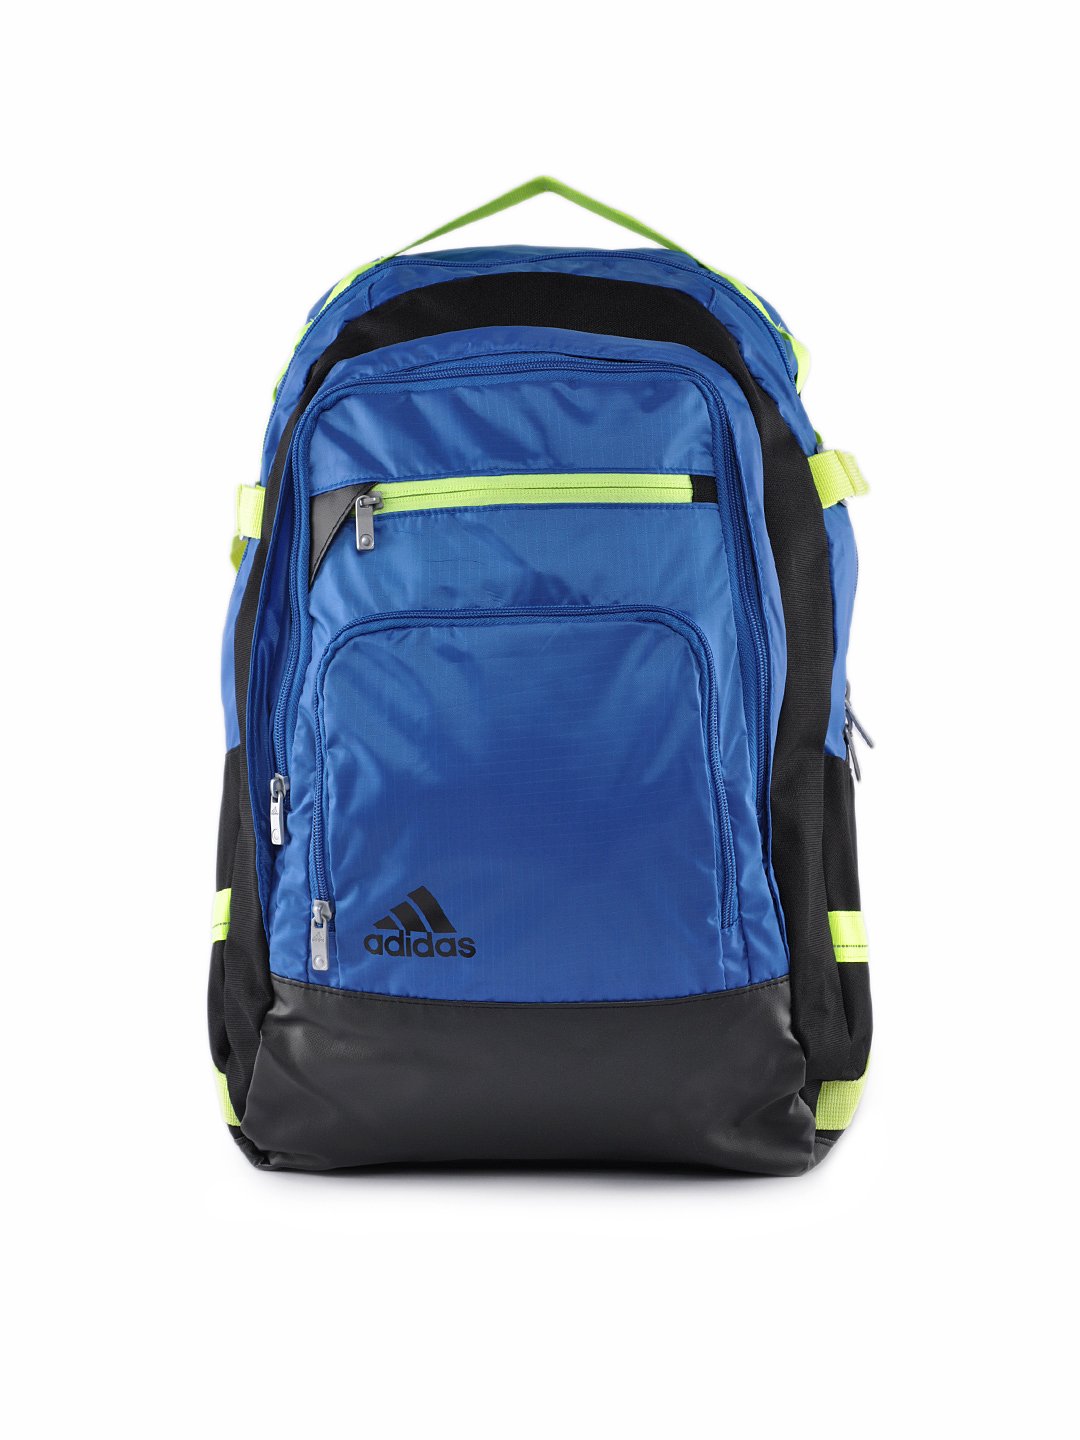 ADIDAS Unisex Blue Casual Backpack